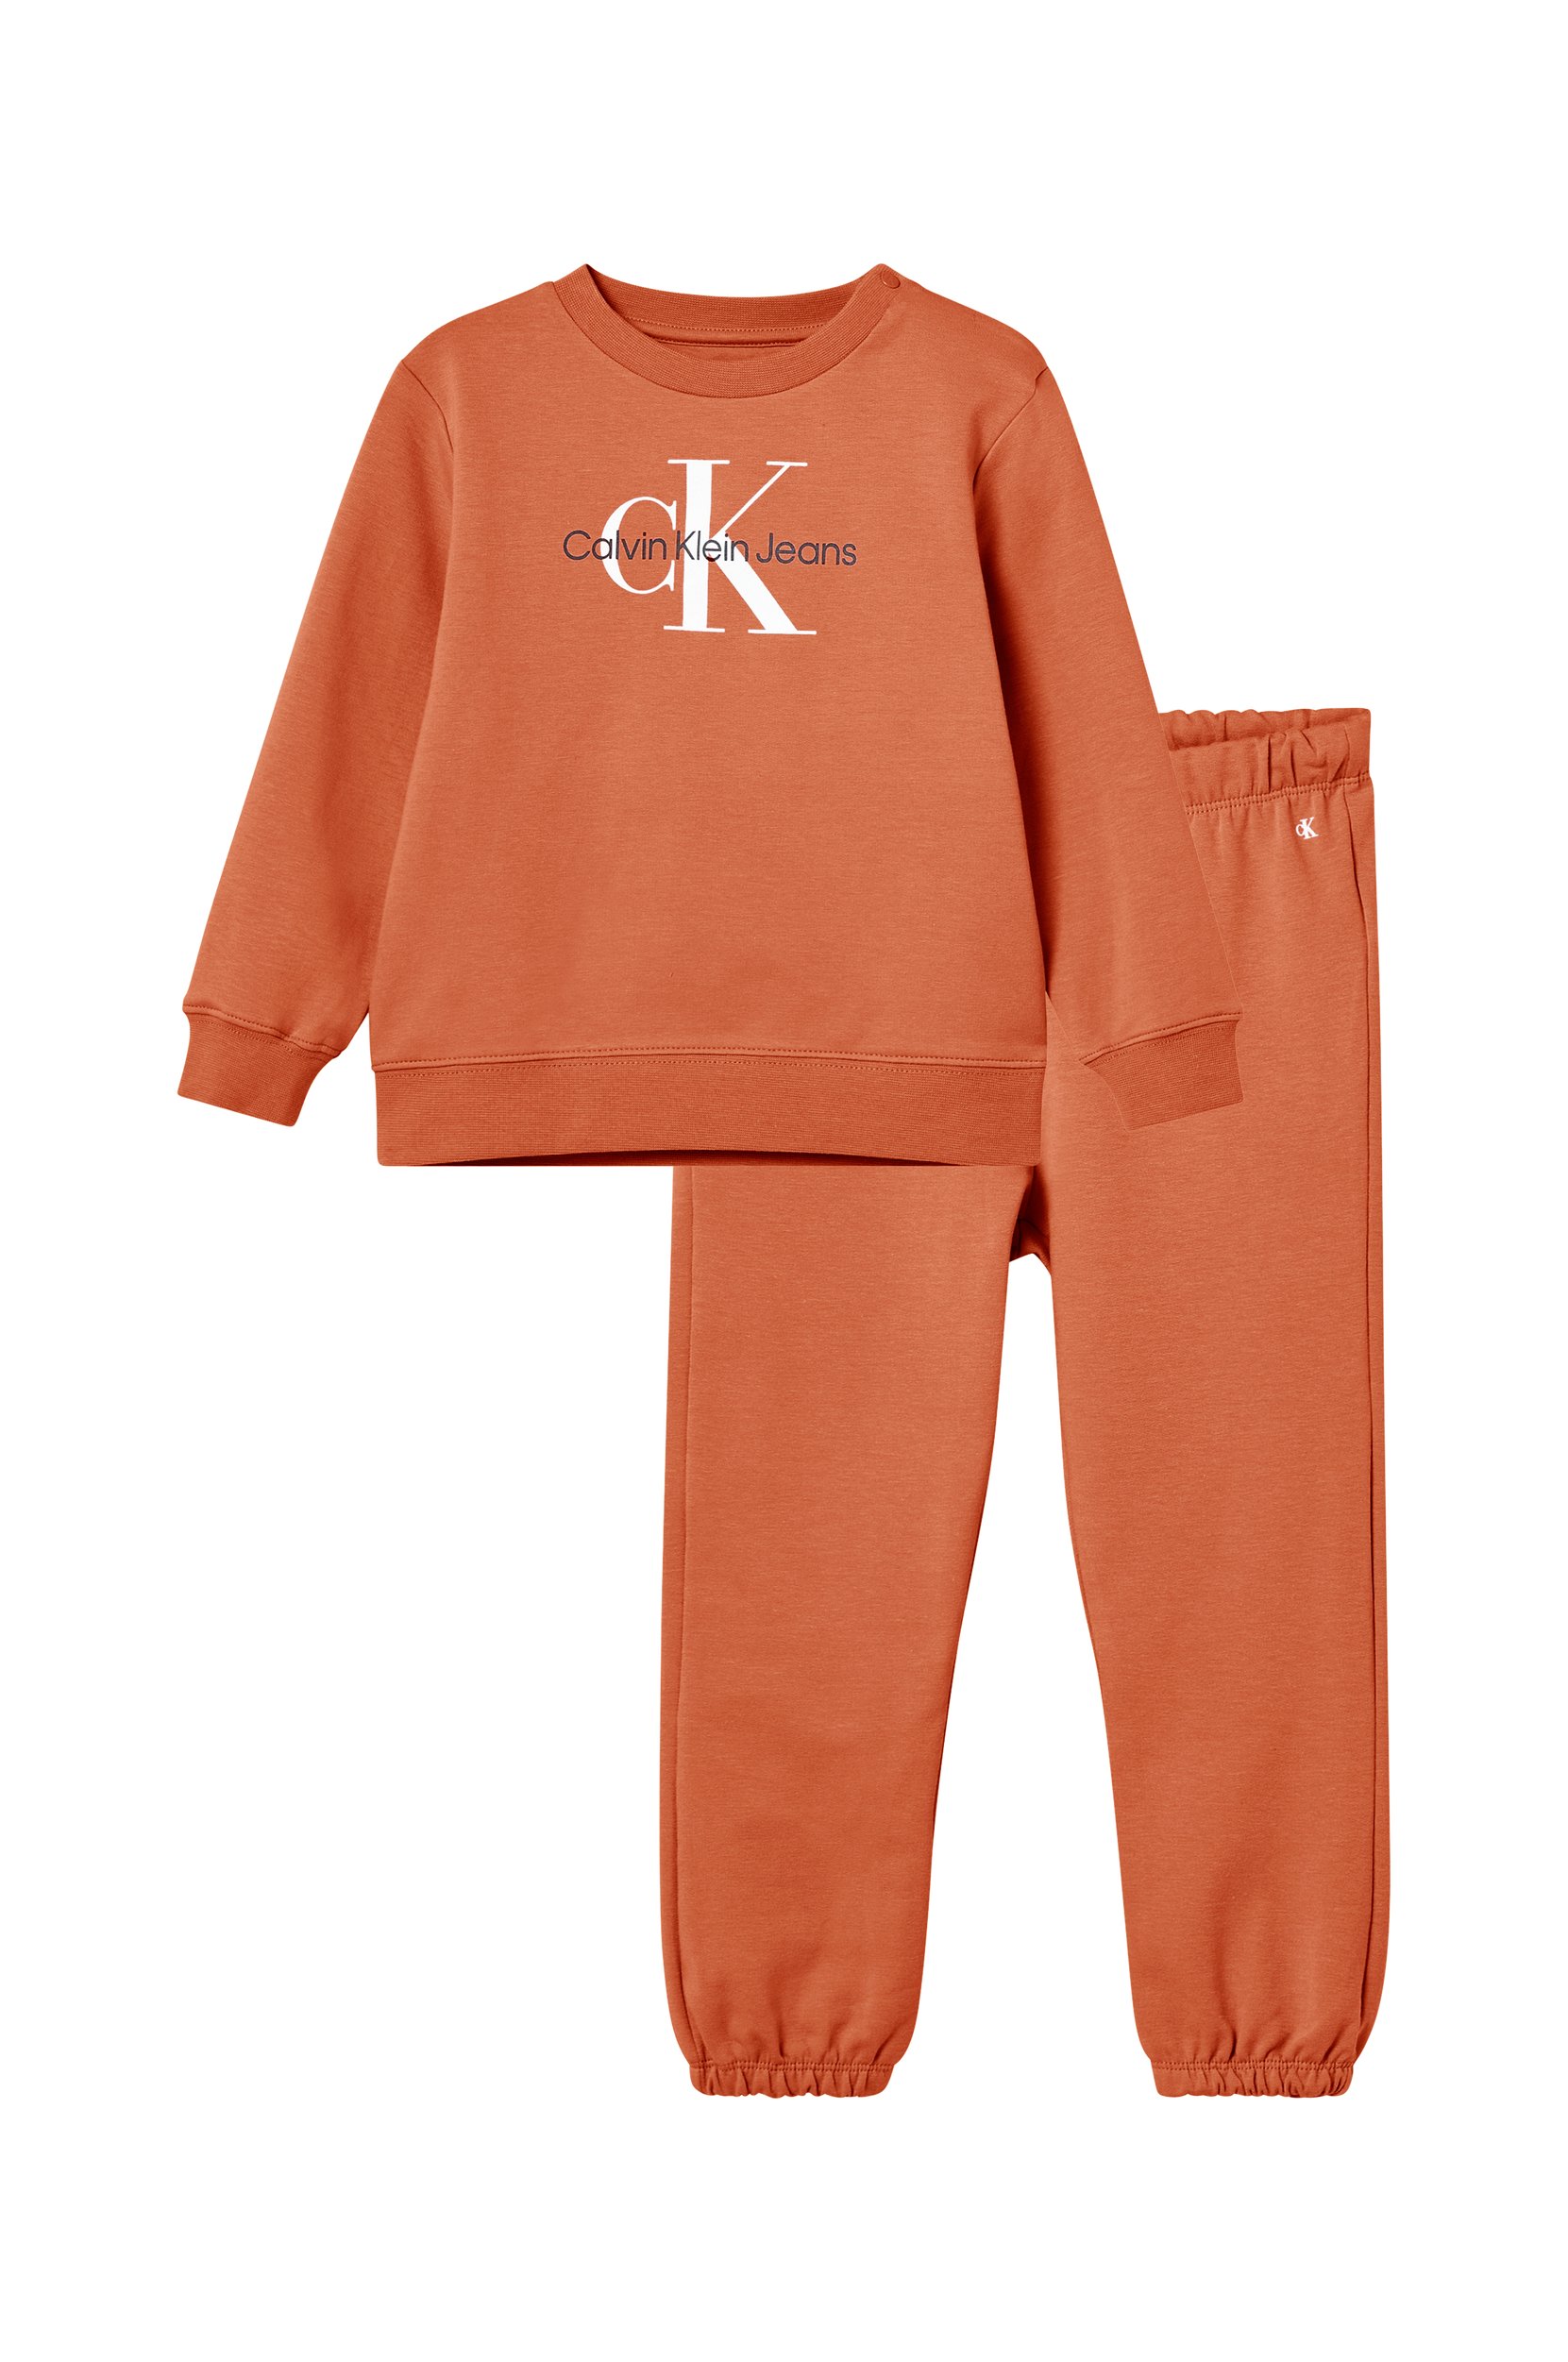 Calvin Klein - Joggingsett Monogram CN Sweatshirt Set - Brun - 98